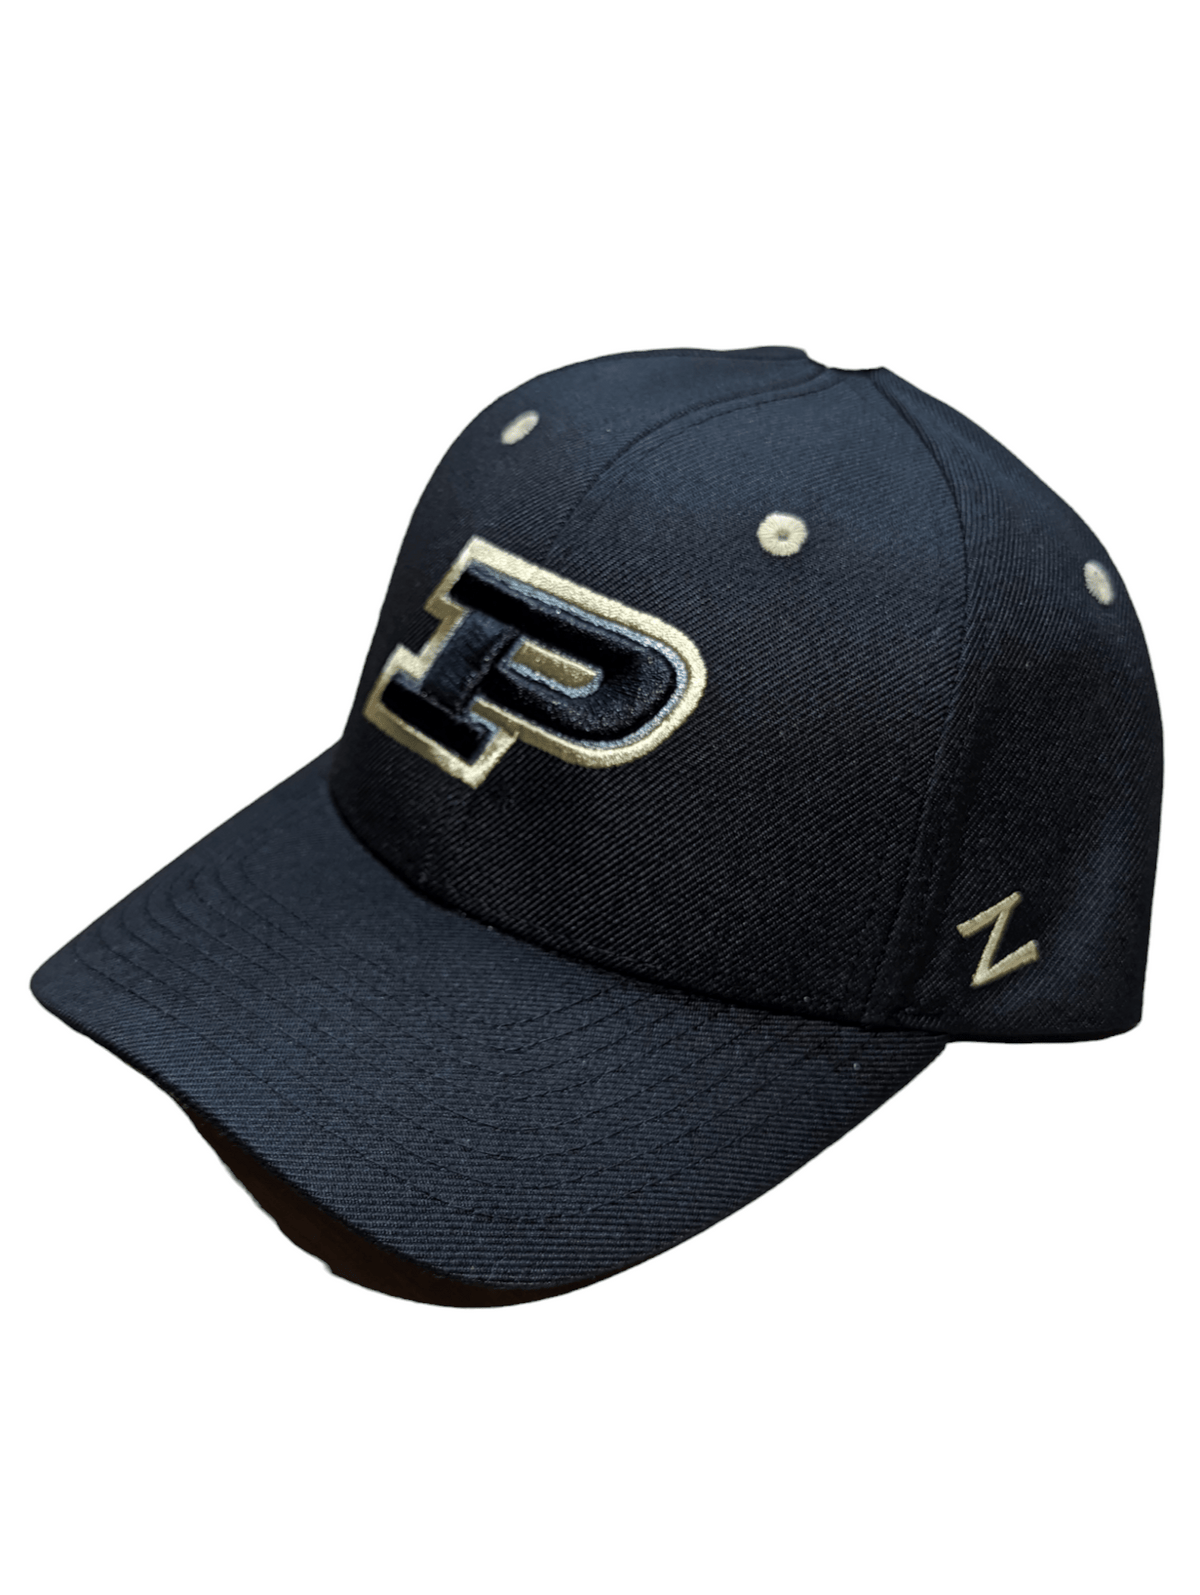 Zephyr Hat Purdue Adjustable Competitor Hat Black